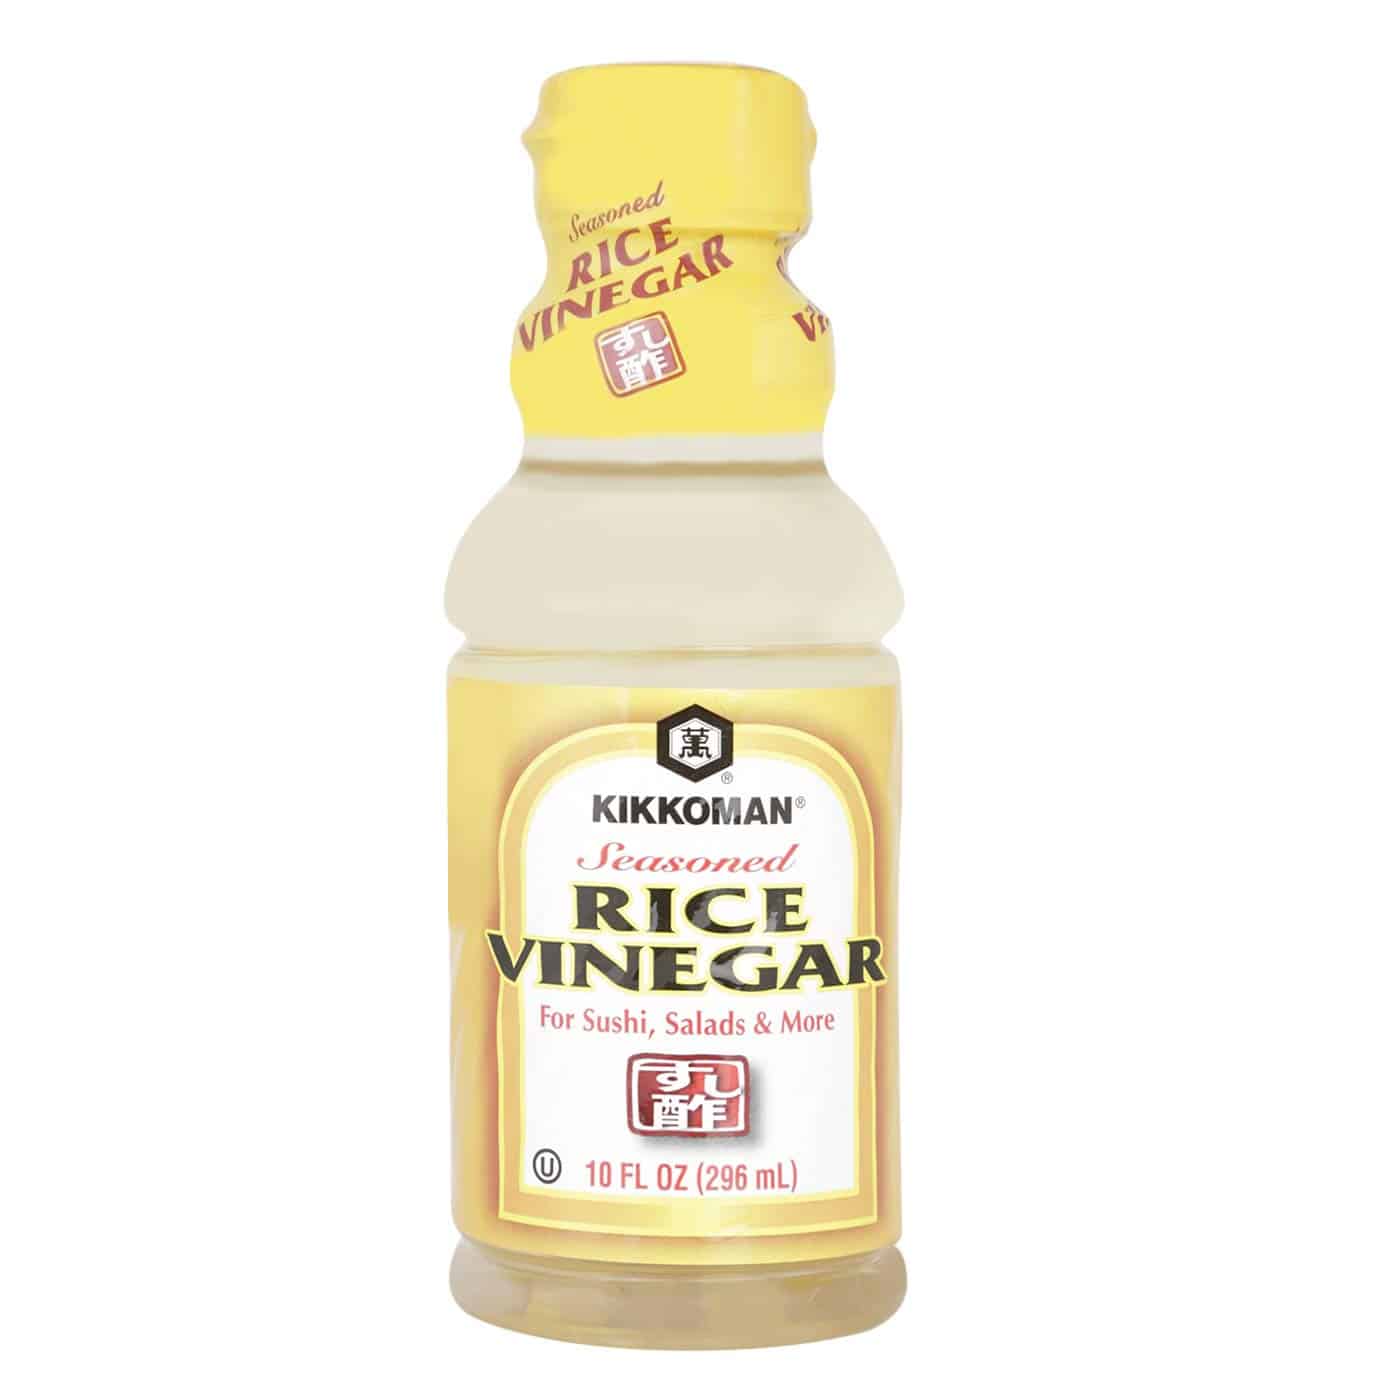 Kikkoman Rice Vinegar Mirin e nkeloang sebaka